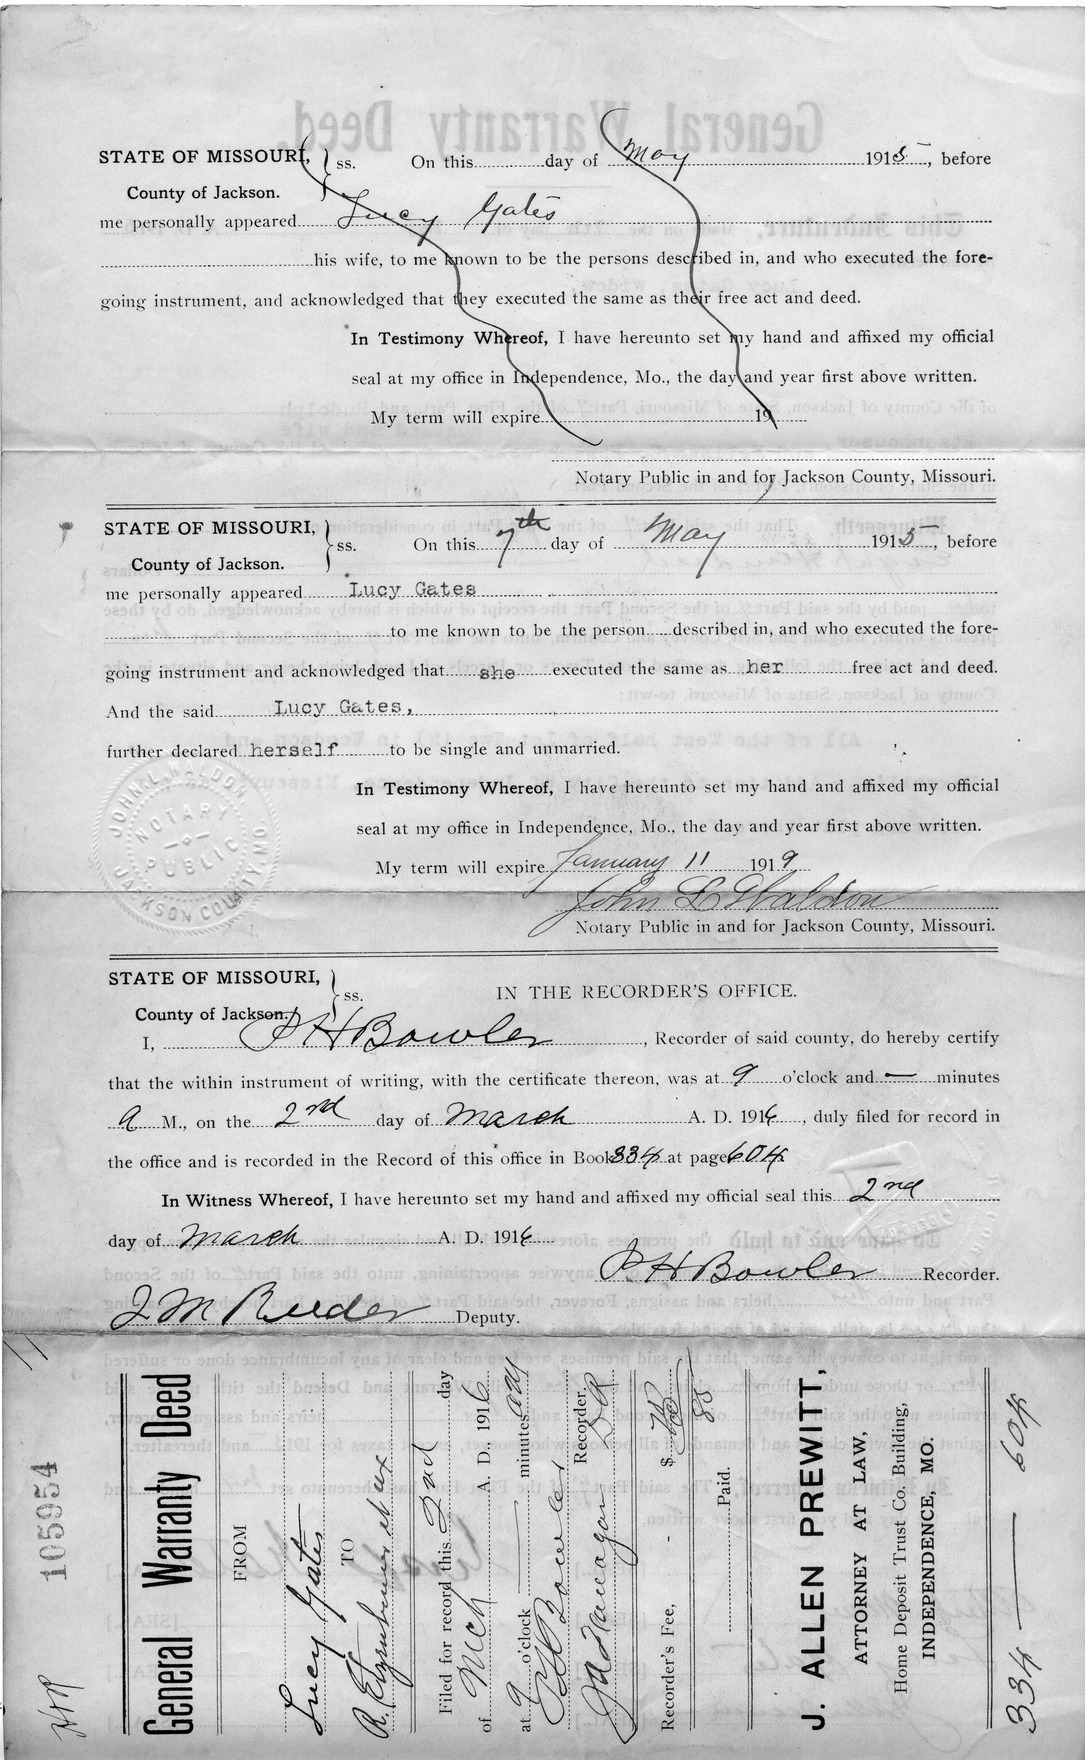 General Warranty Deed from Lucy Gates to Rudolph Etzenhouser and Melissa C. Etzenhouser